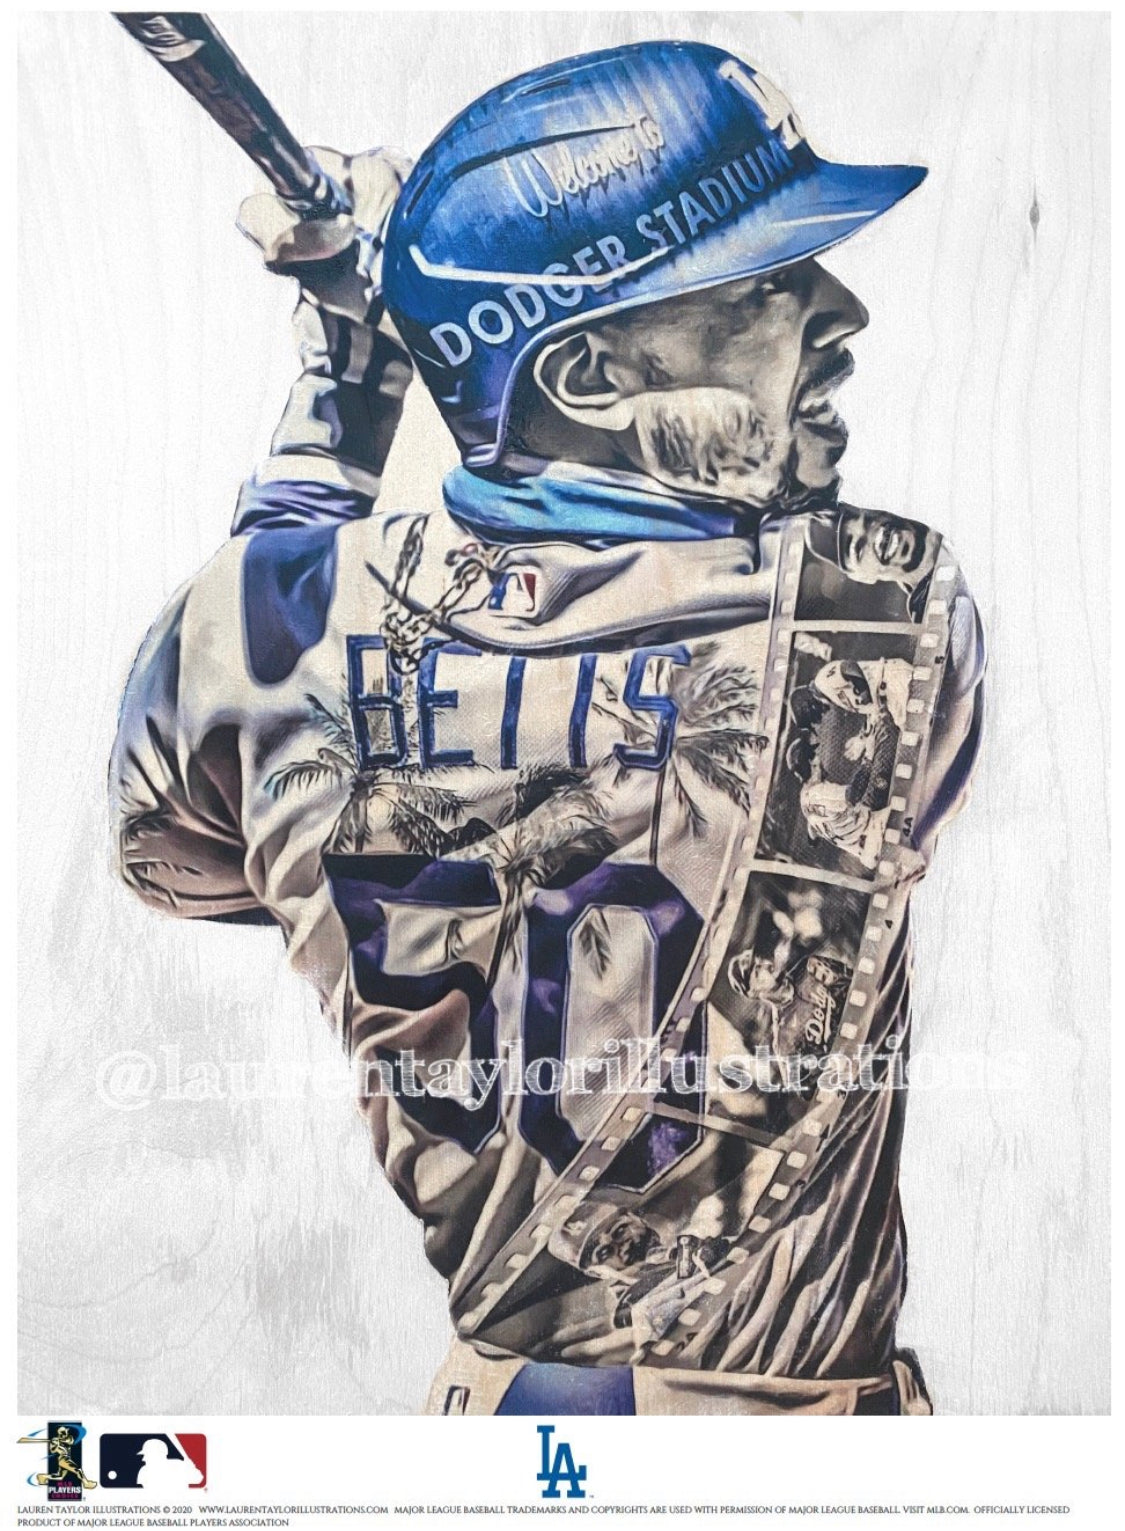 LA Dodgers Lithograph print of Mookie Betts 2020